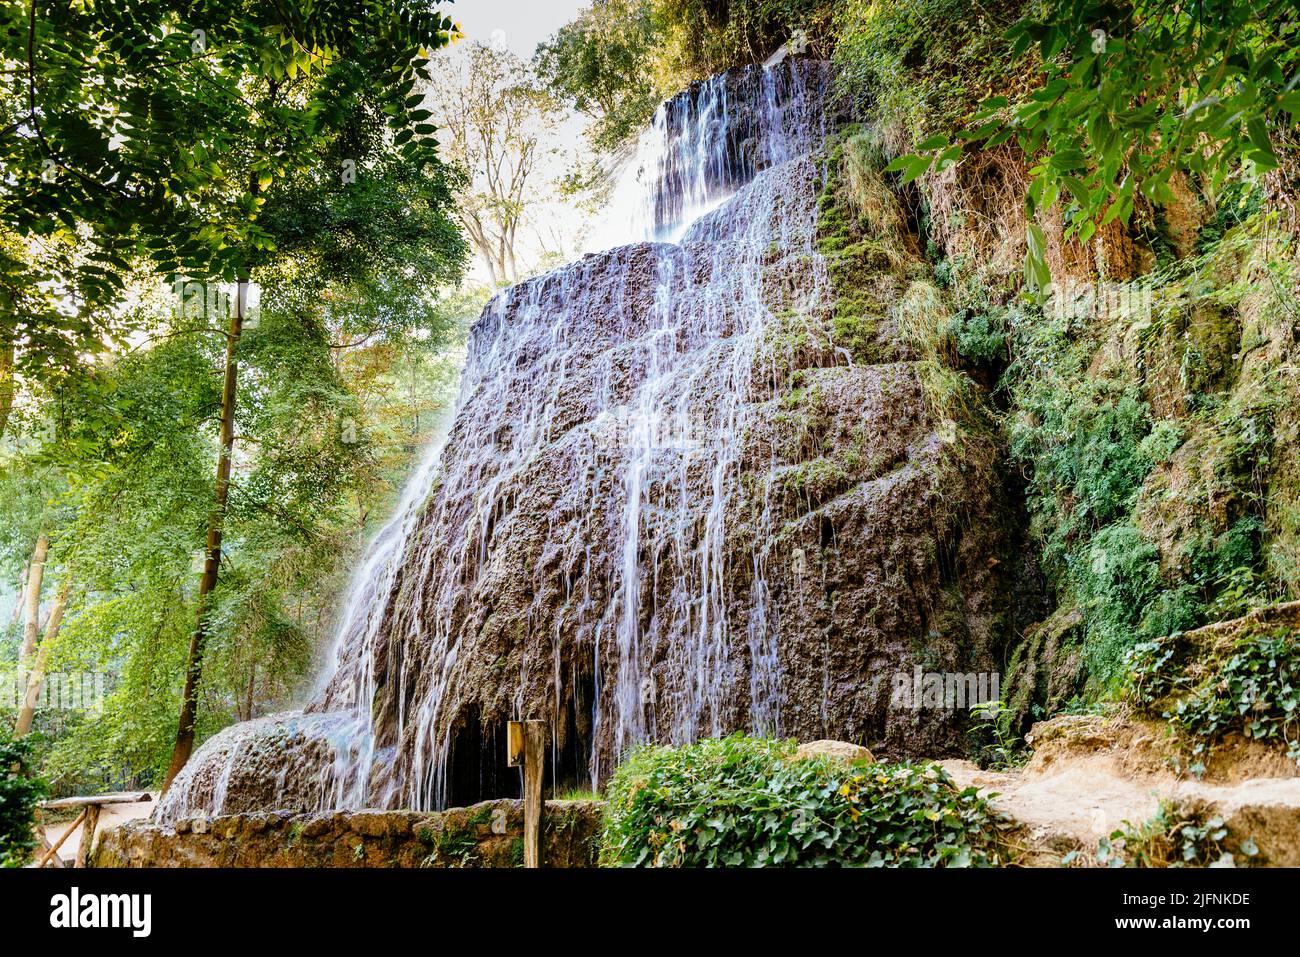 The waterfall called 'Cascada Trinidad - Trinidad waterfall'. Natural Park of the Monasterio de Piedra - Stone Monastery. Nuévalos, Zaragoza, Aragón, Stock Photo